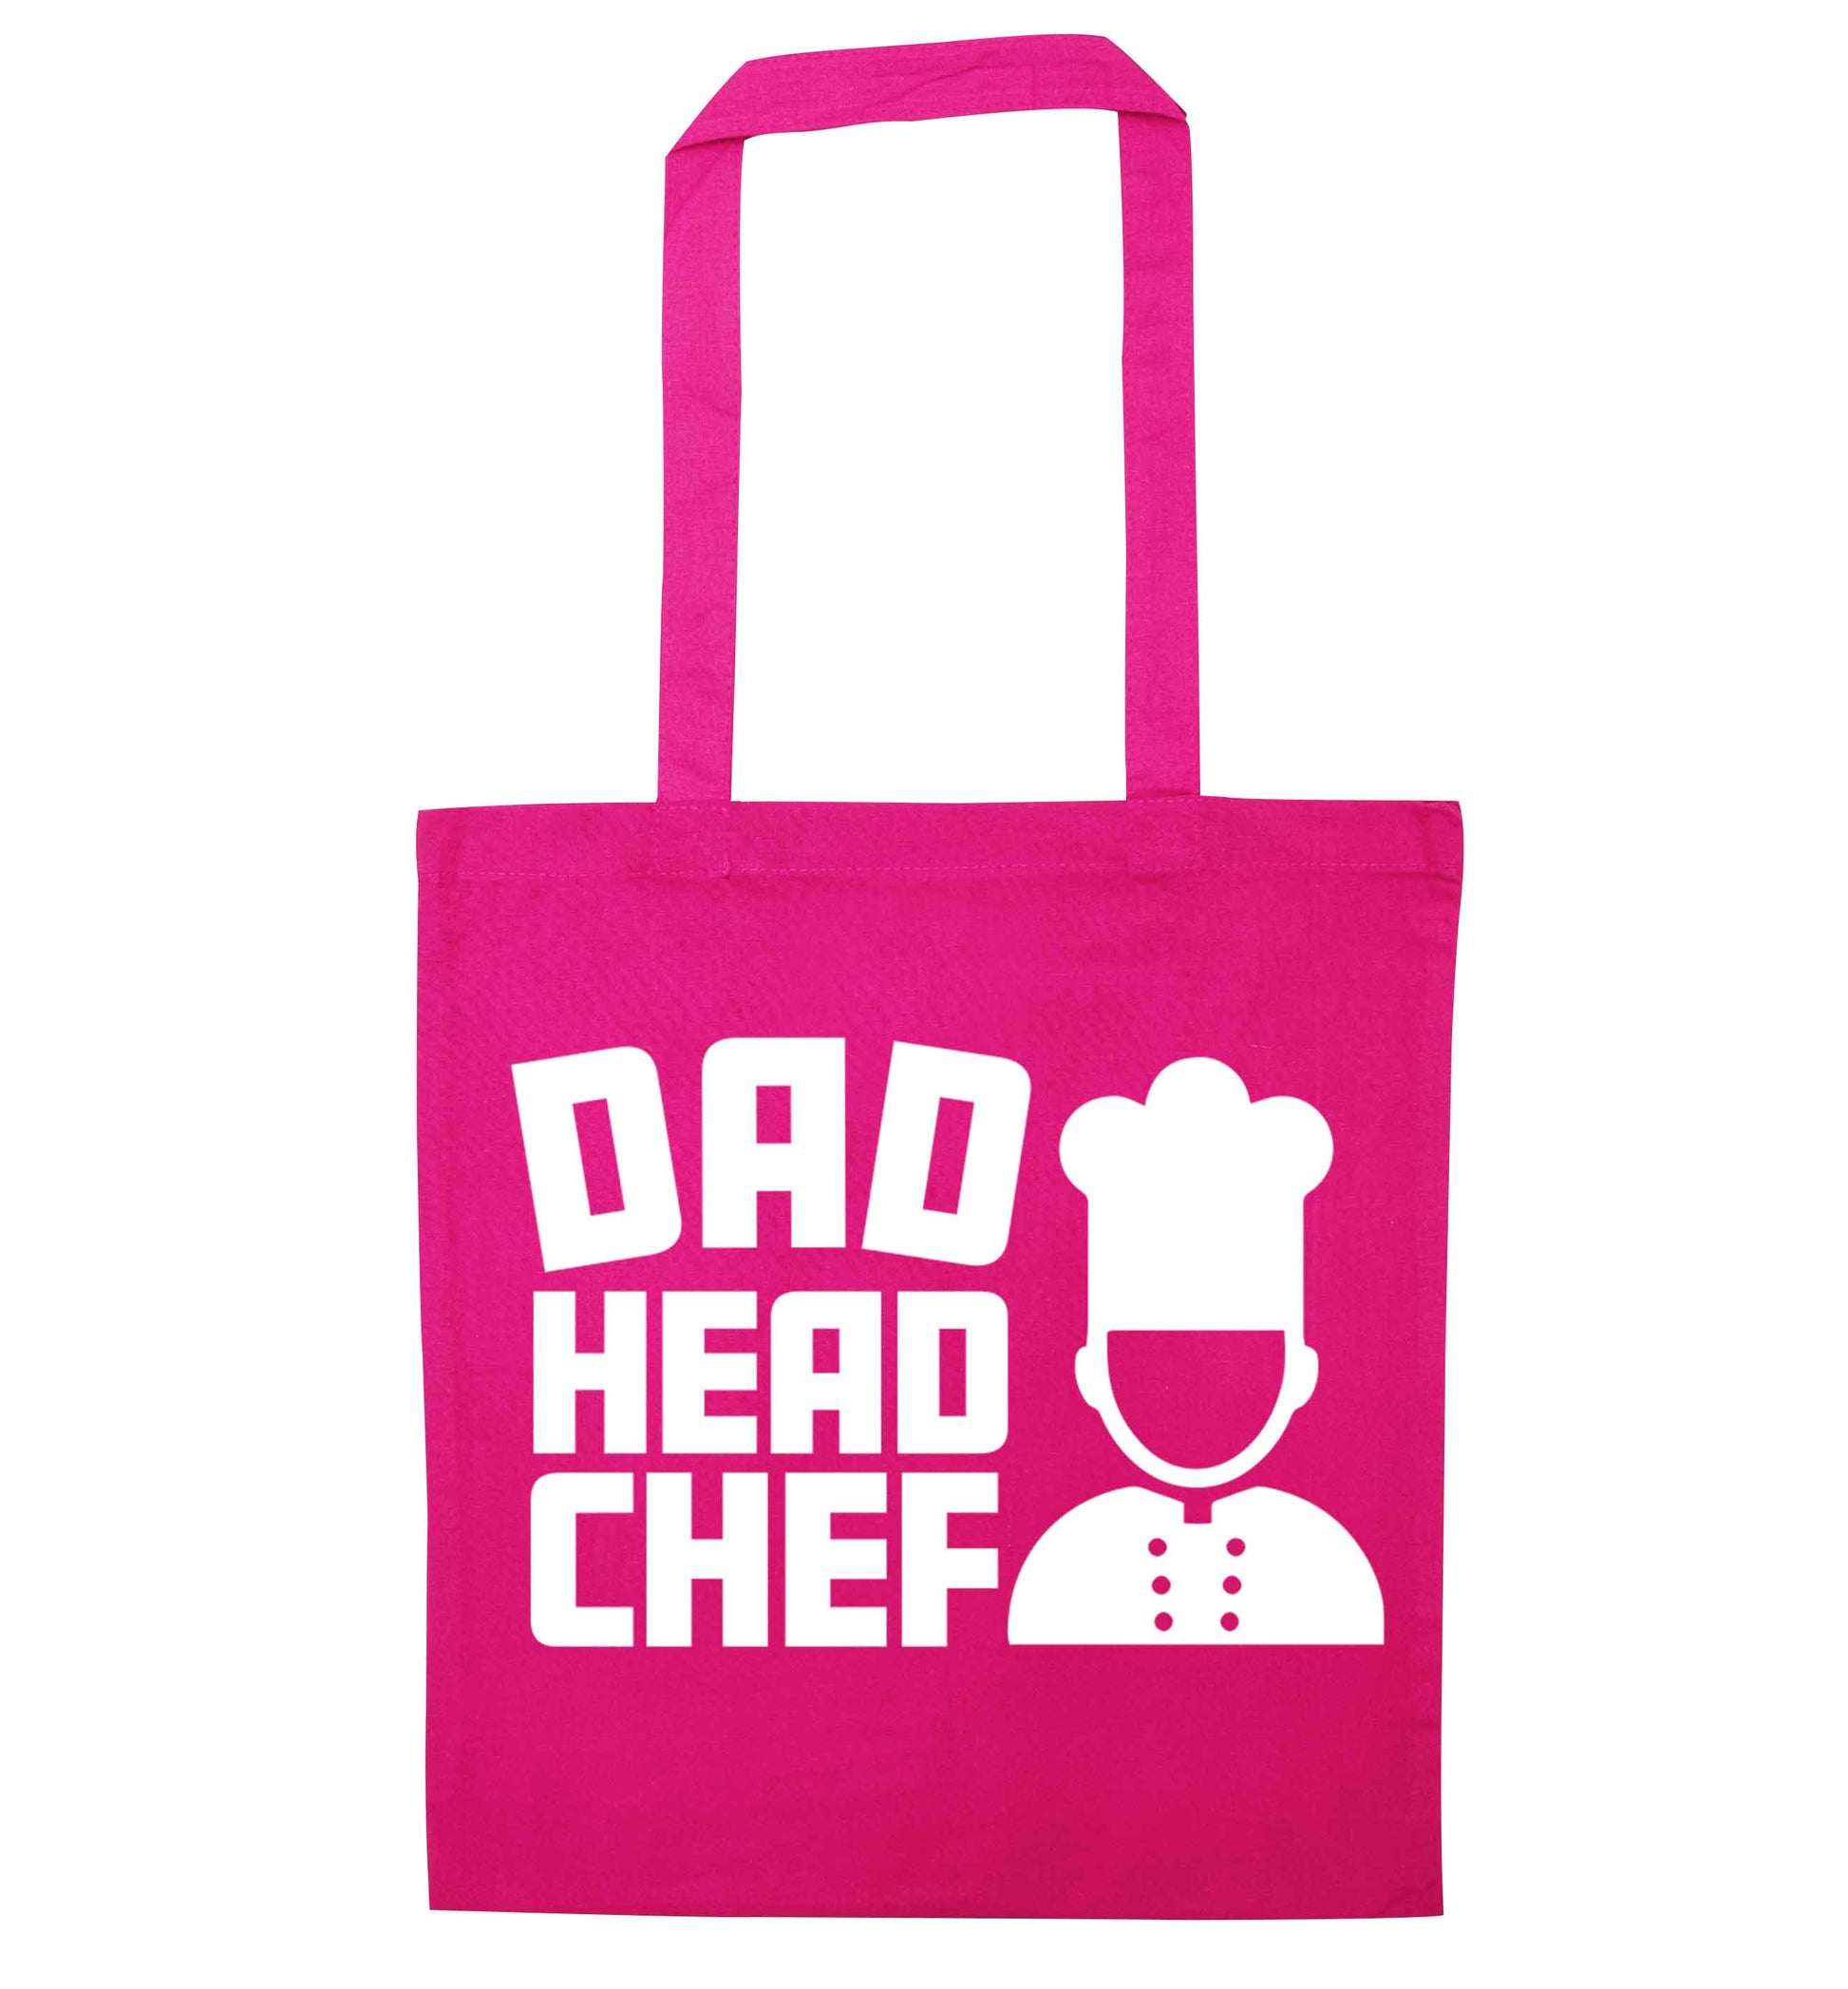 Dad head chef pink tote bag